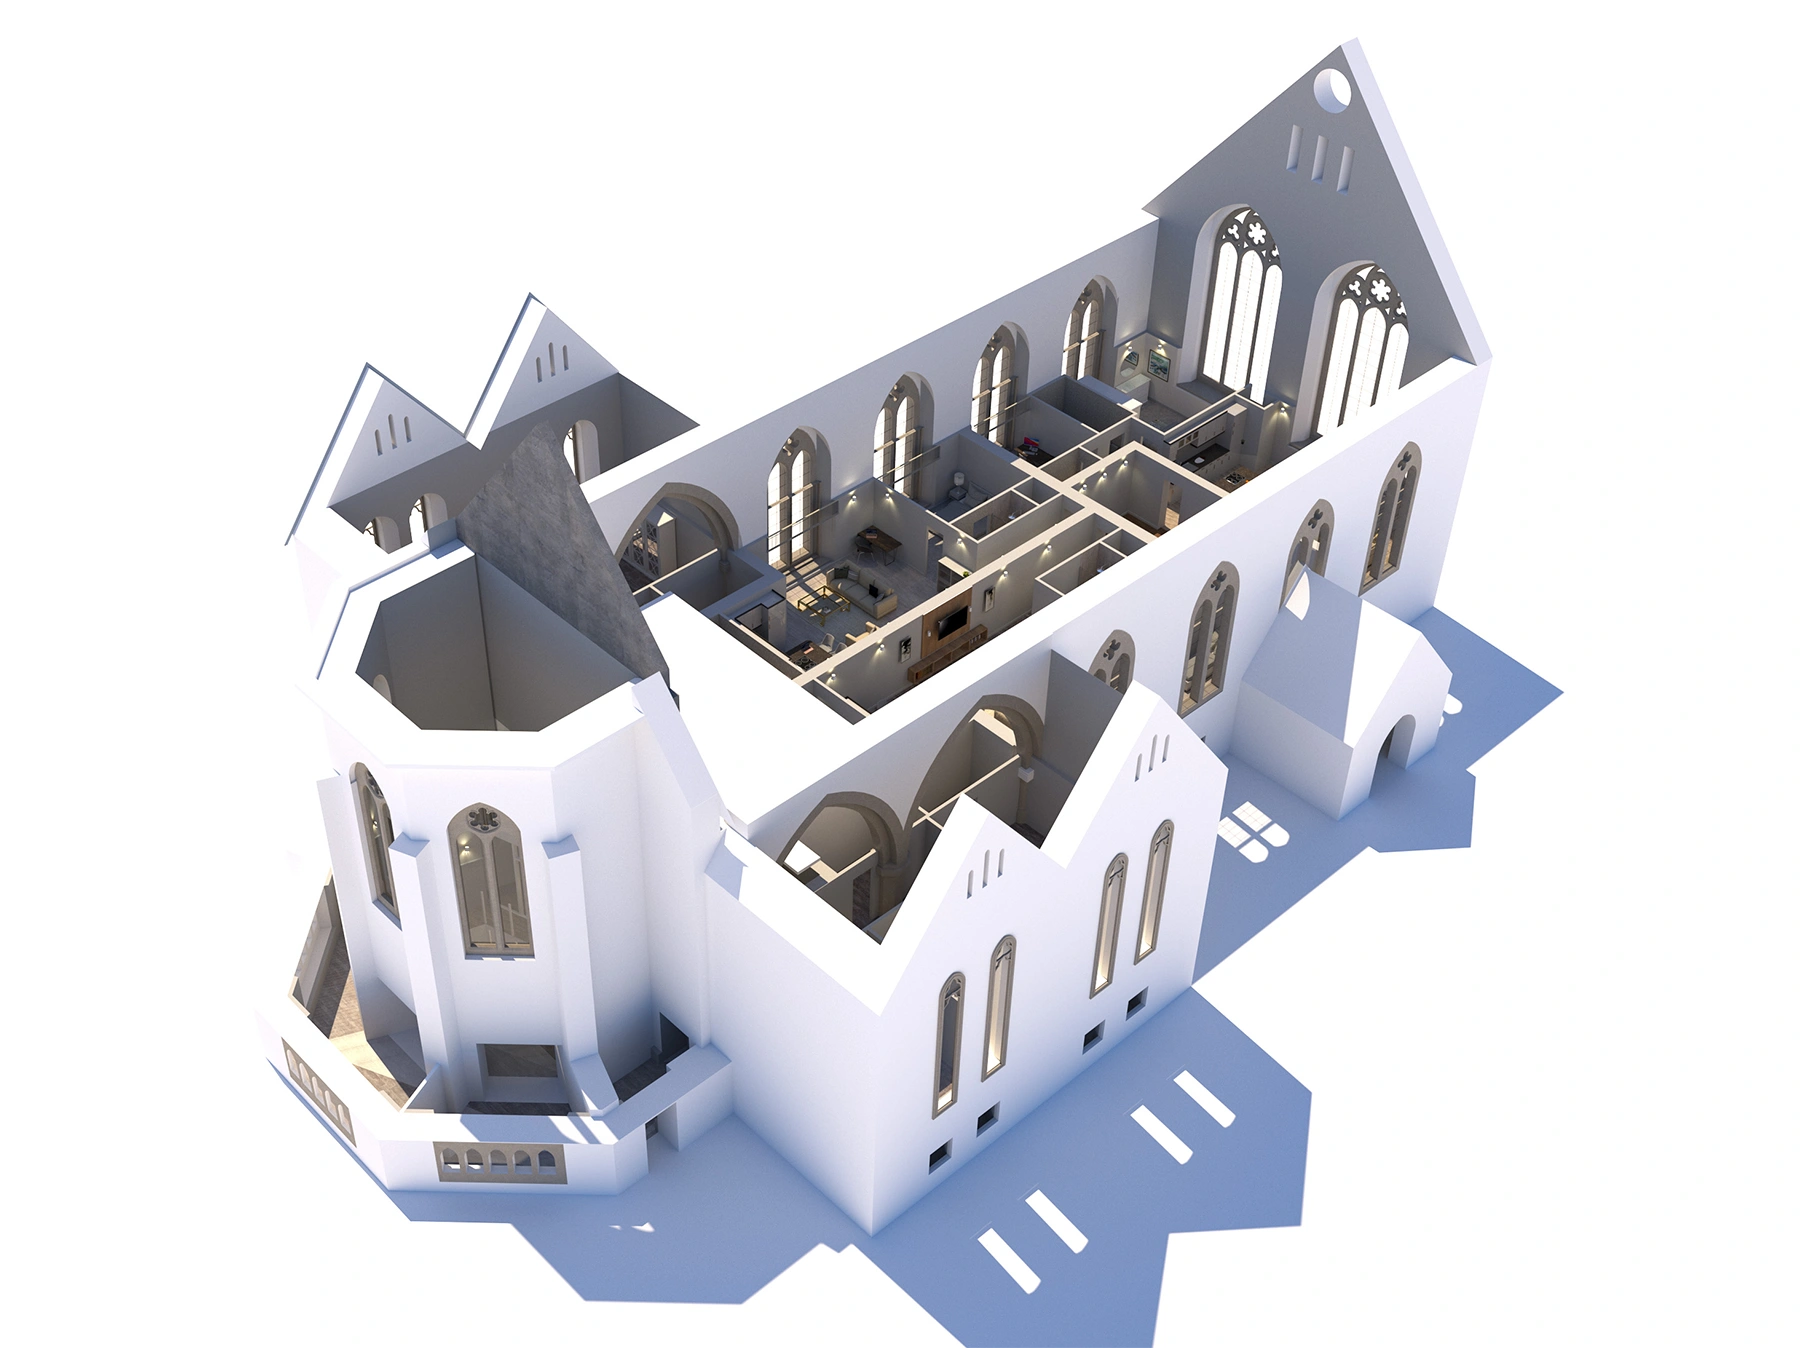 St Johns church conversion into 9 dwellings